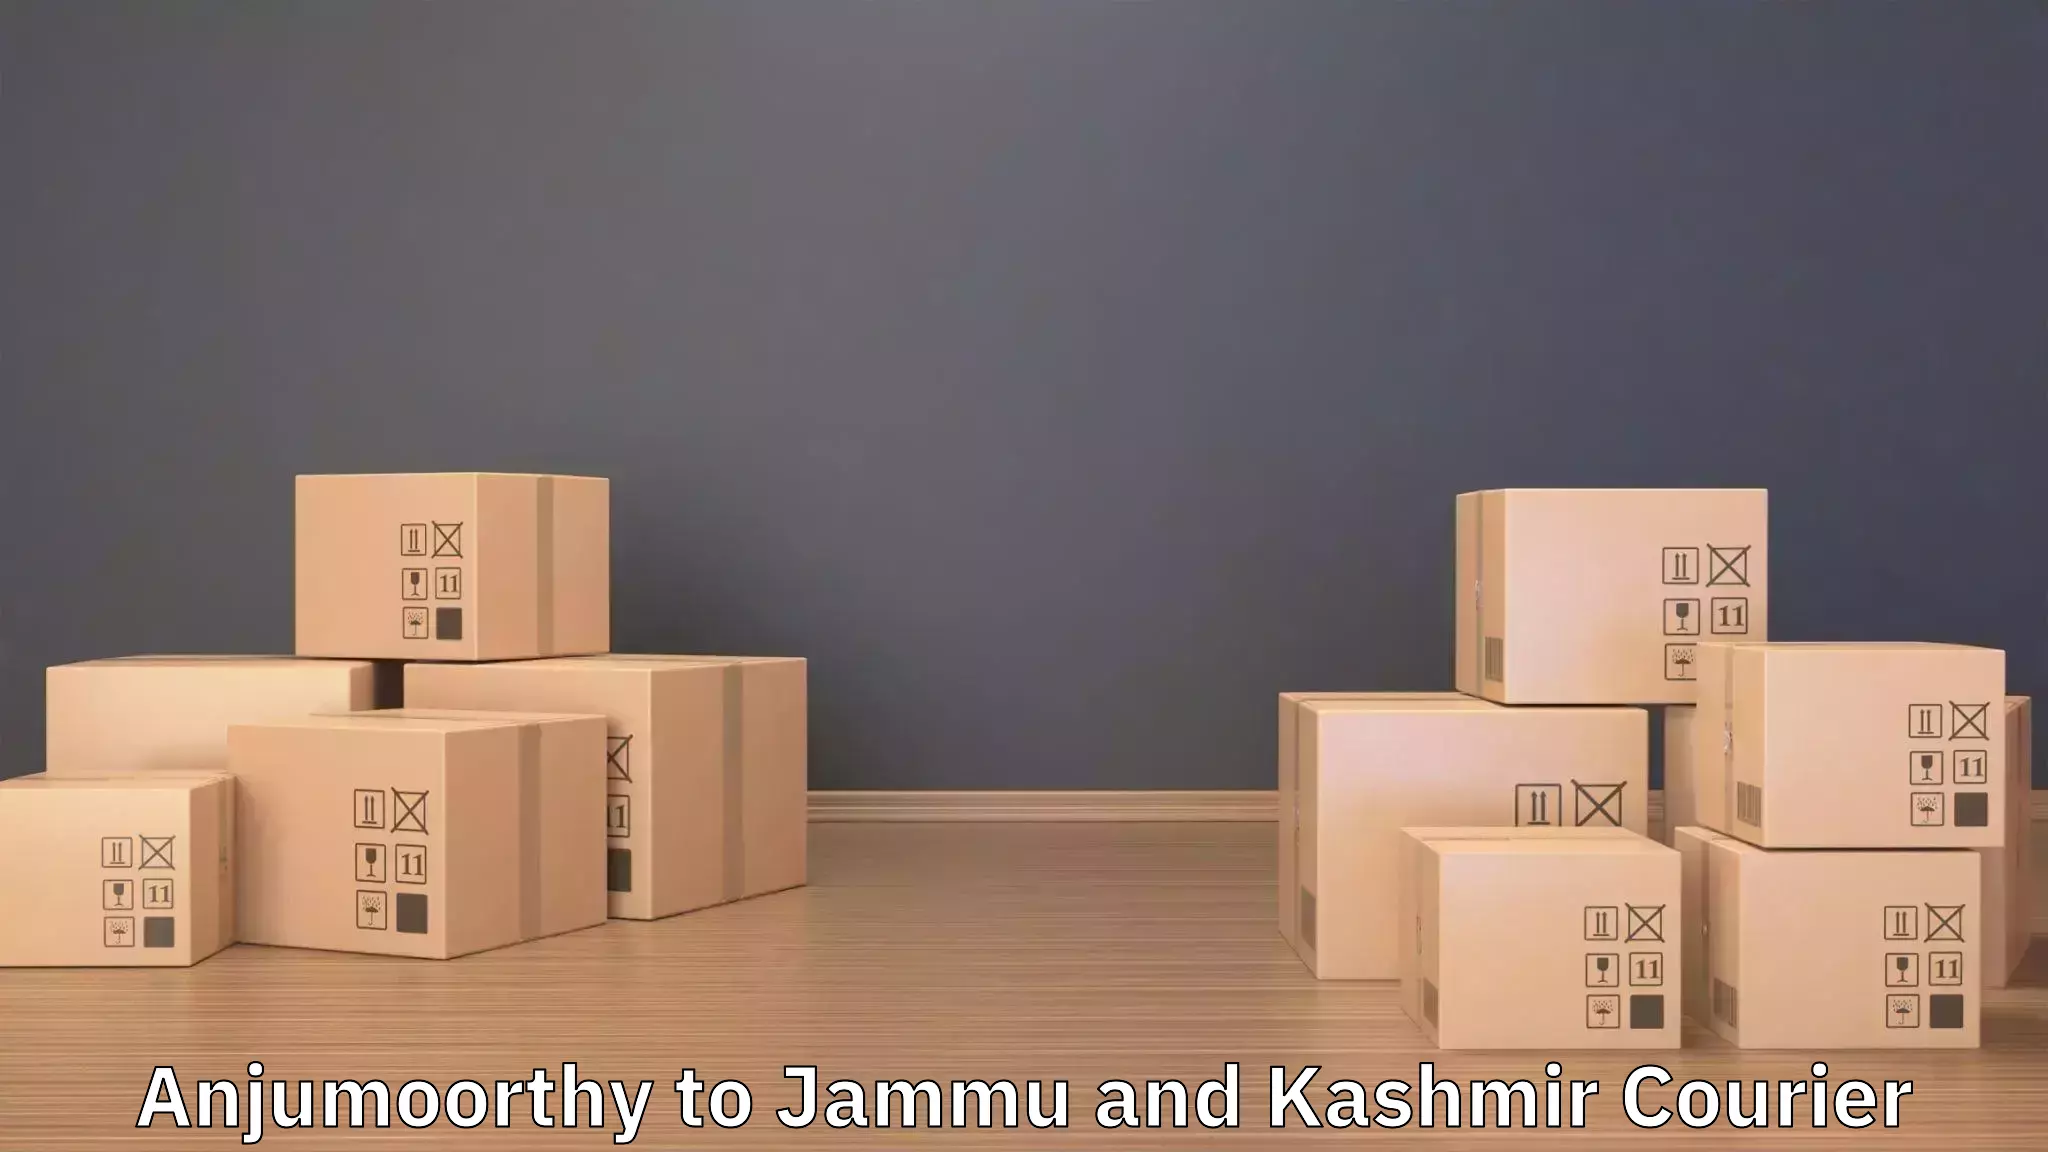 Efficient household relocation Anjumoorthy to Srinagar Kashmir